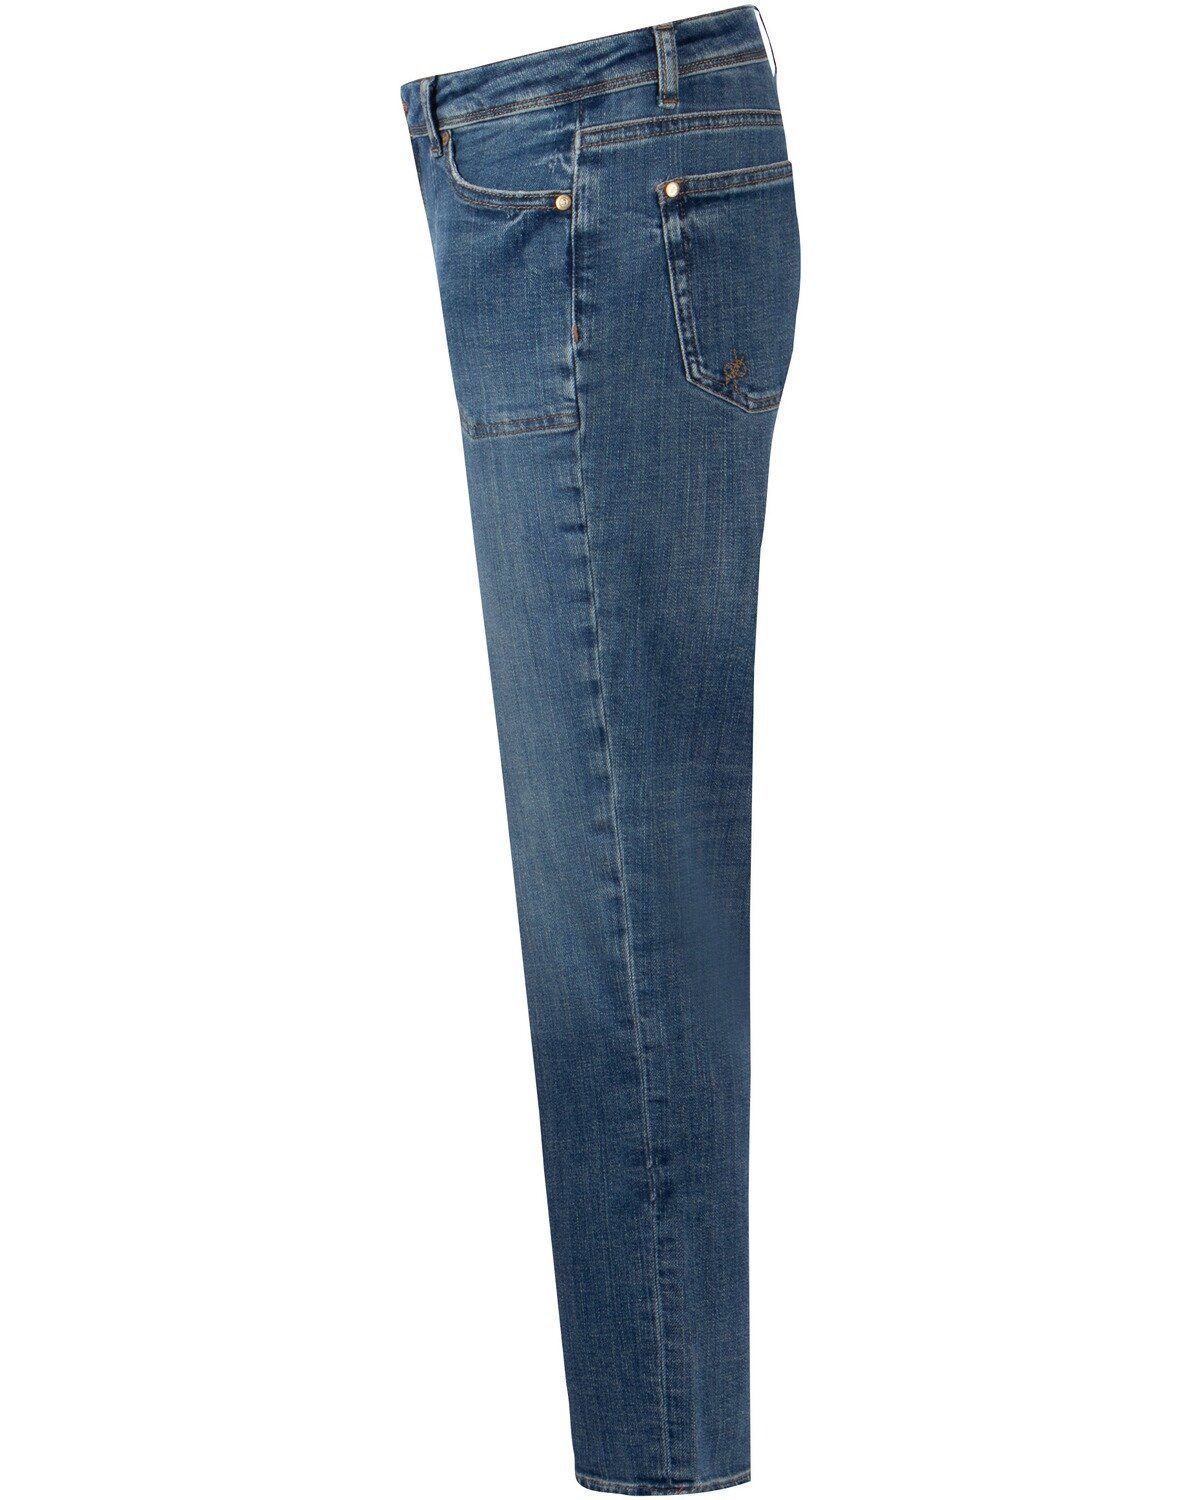 Raffaello Jeans Leyle Rossi 5-Pocket-Jeans